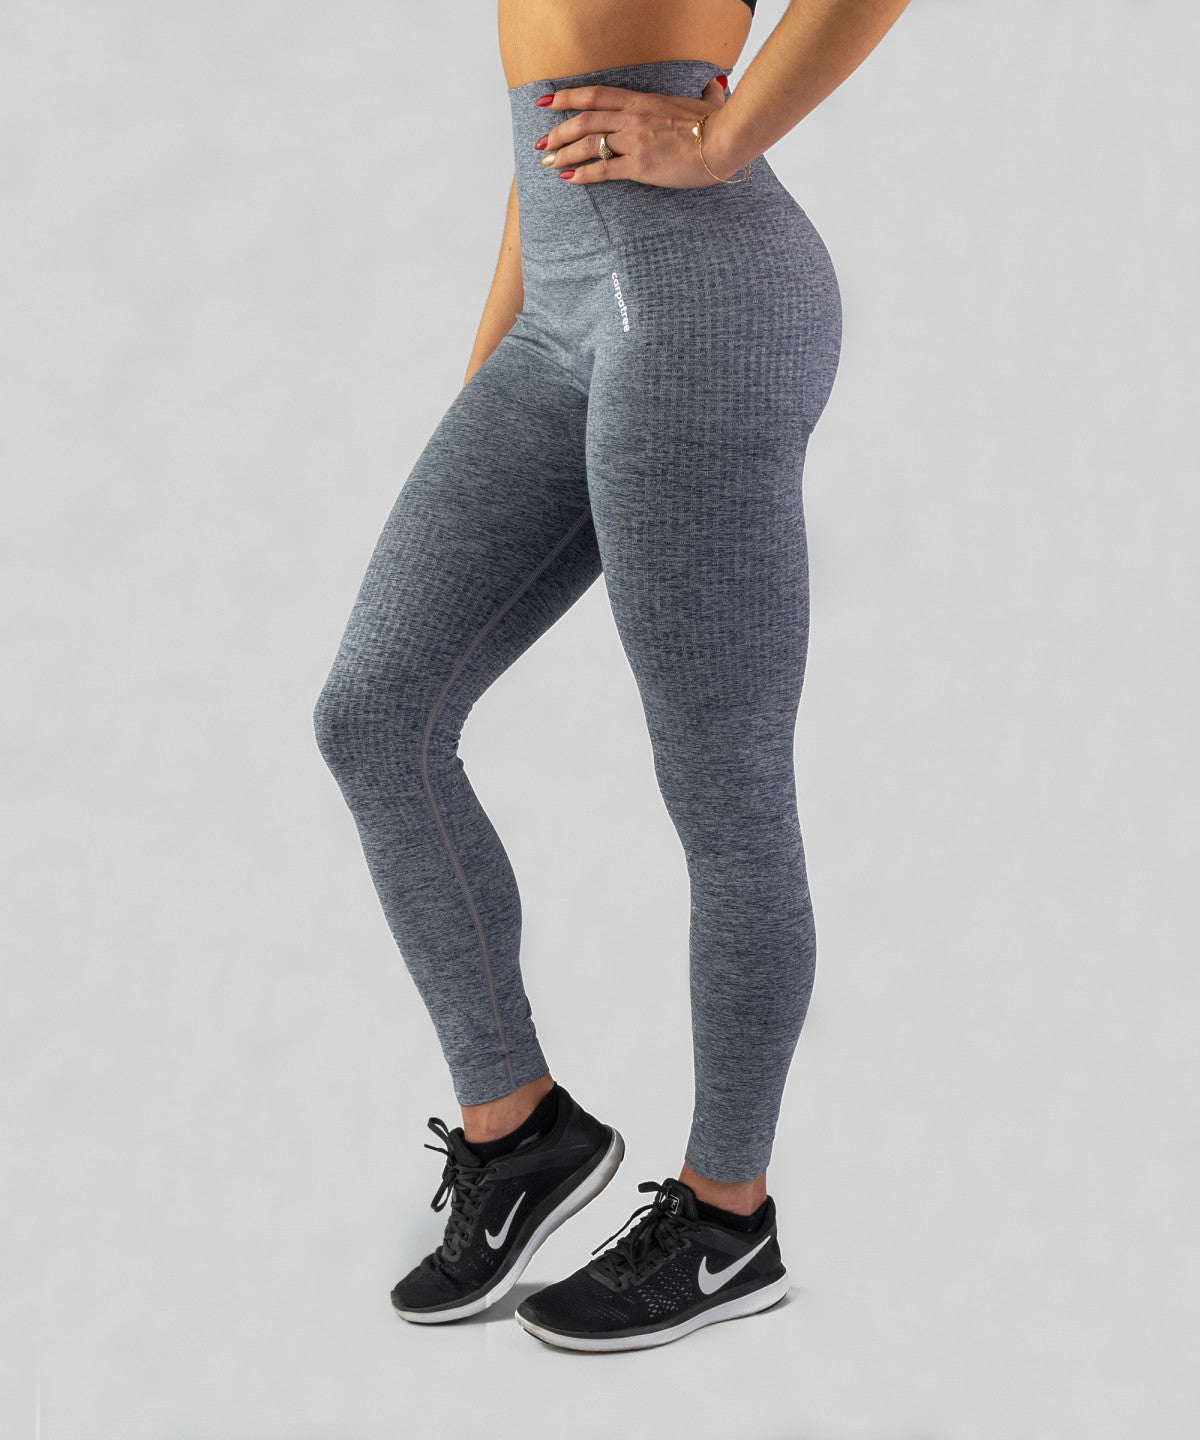 Carpatree Model One Seamless Leggings - grey high waisted activewear sports leggings